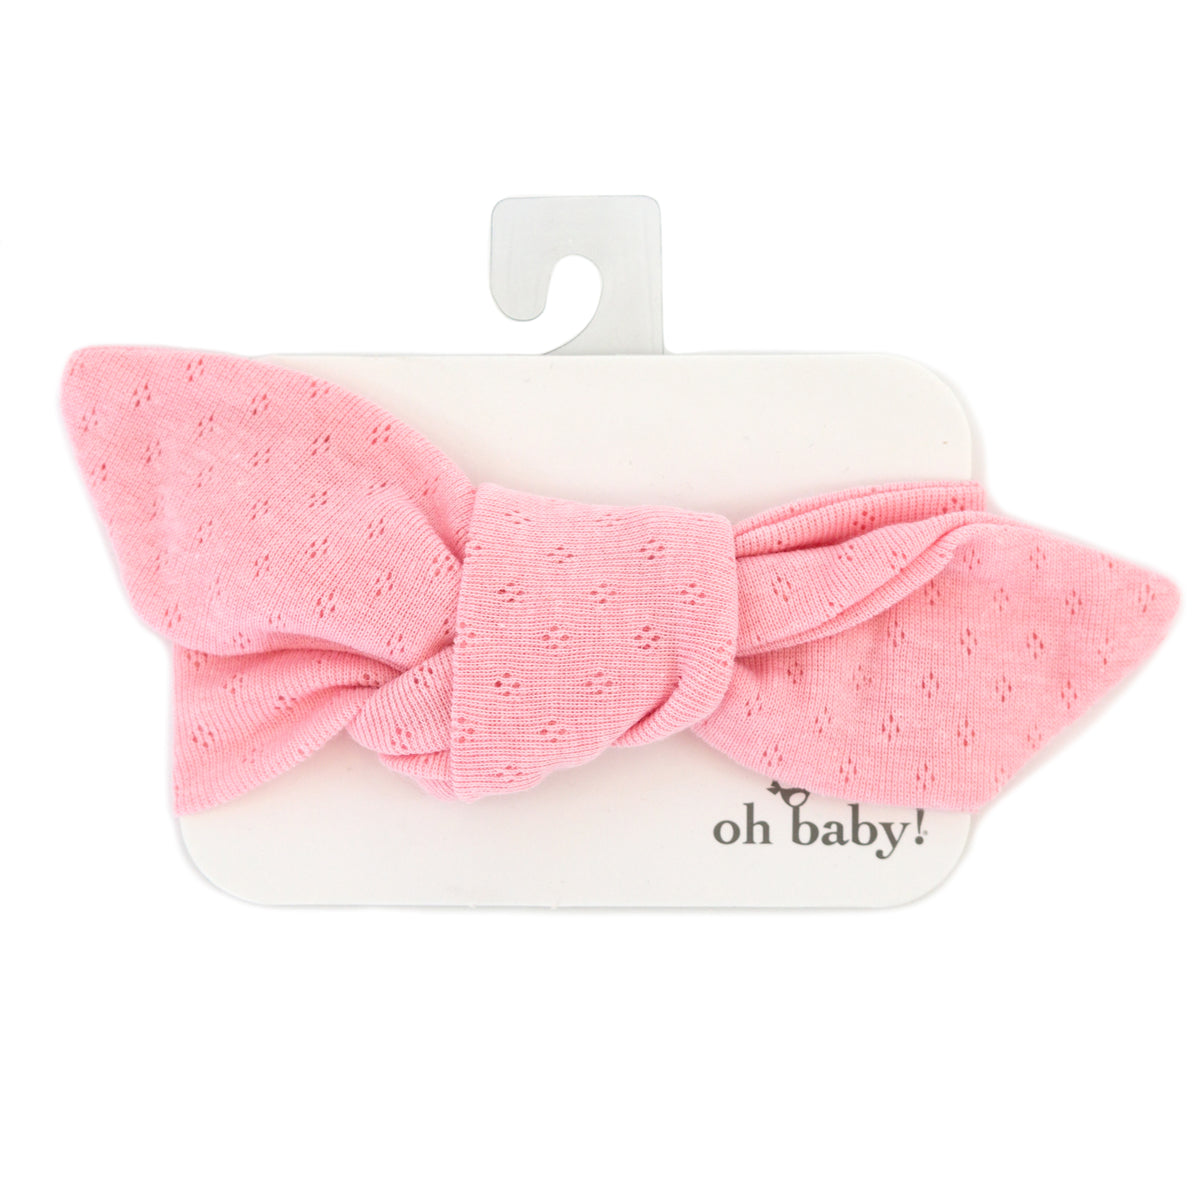 oh baby! Pointelle Tie Turban - Pink Heather